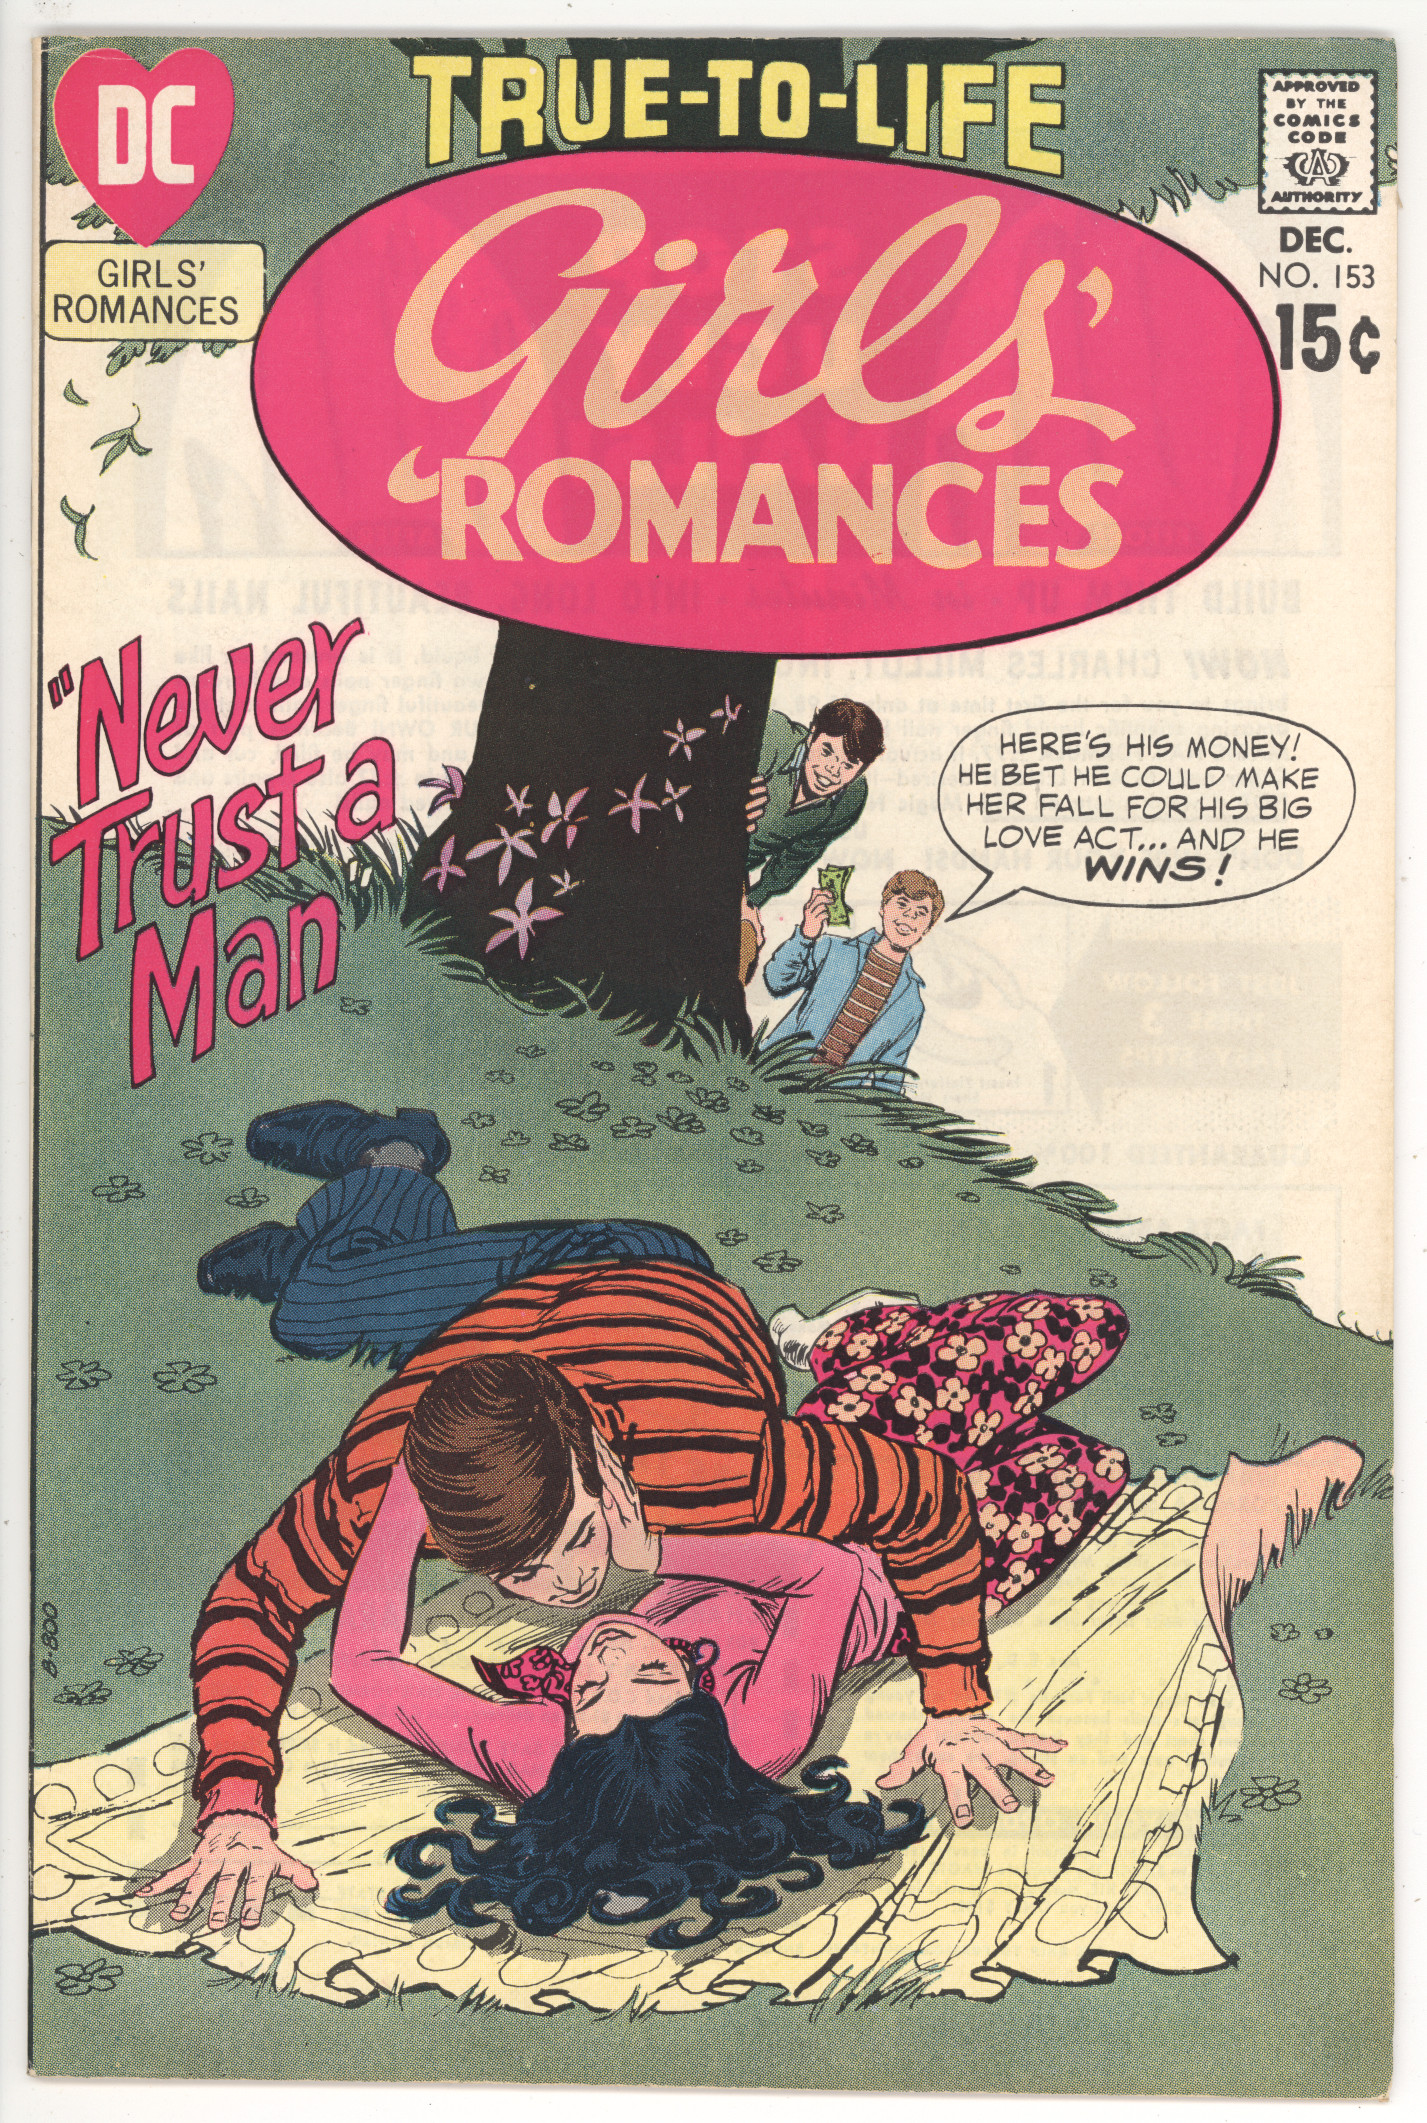 Girls' Romances #153 front